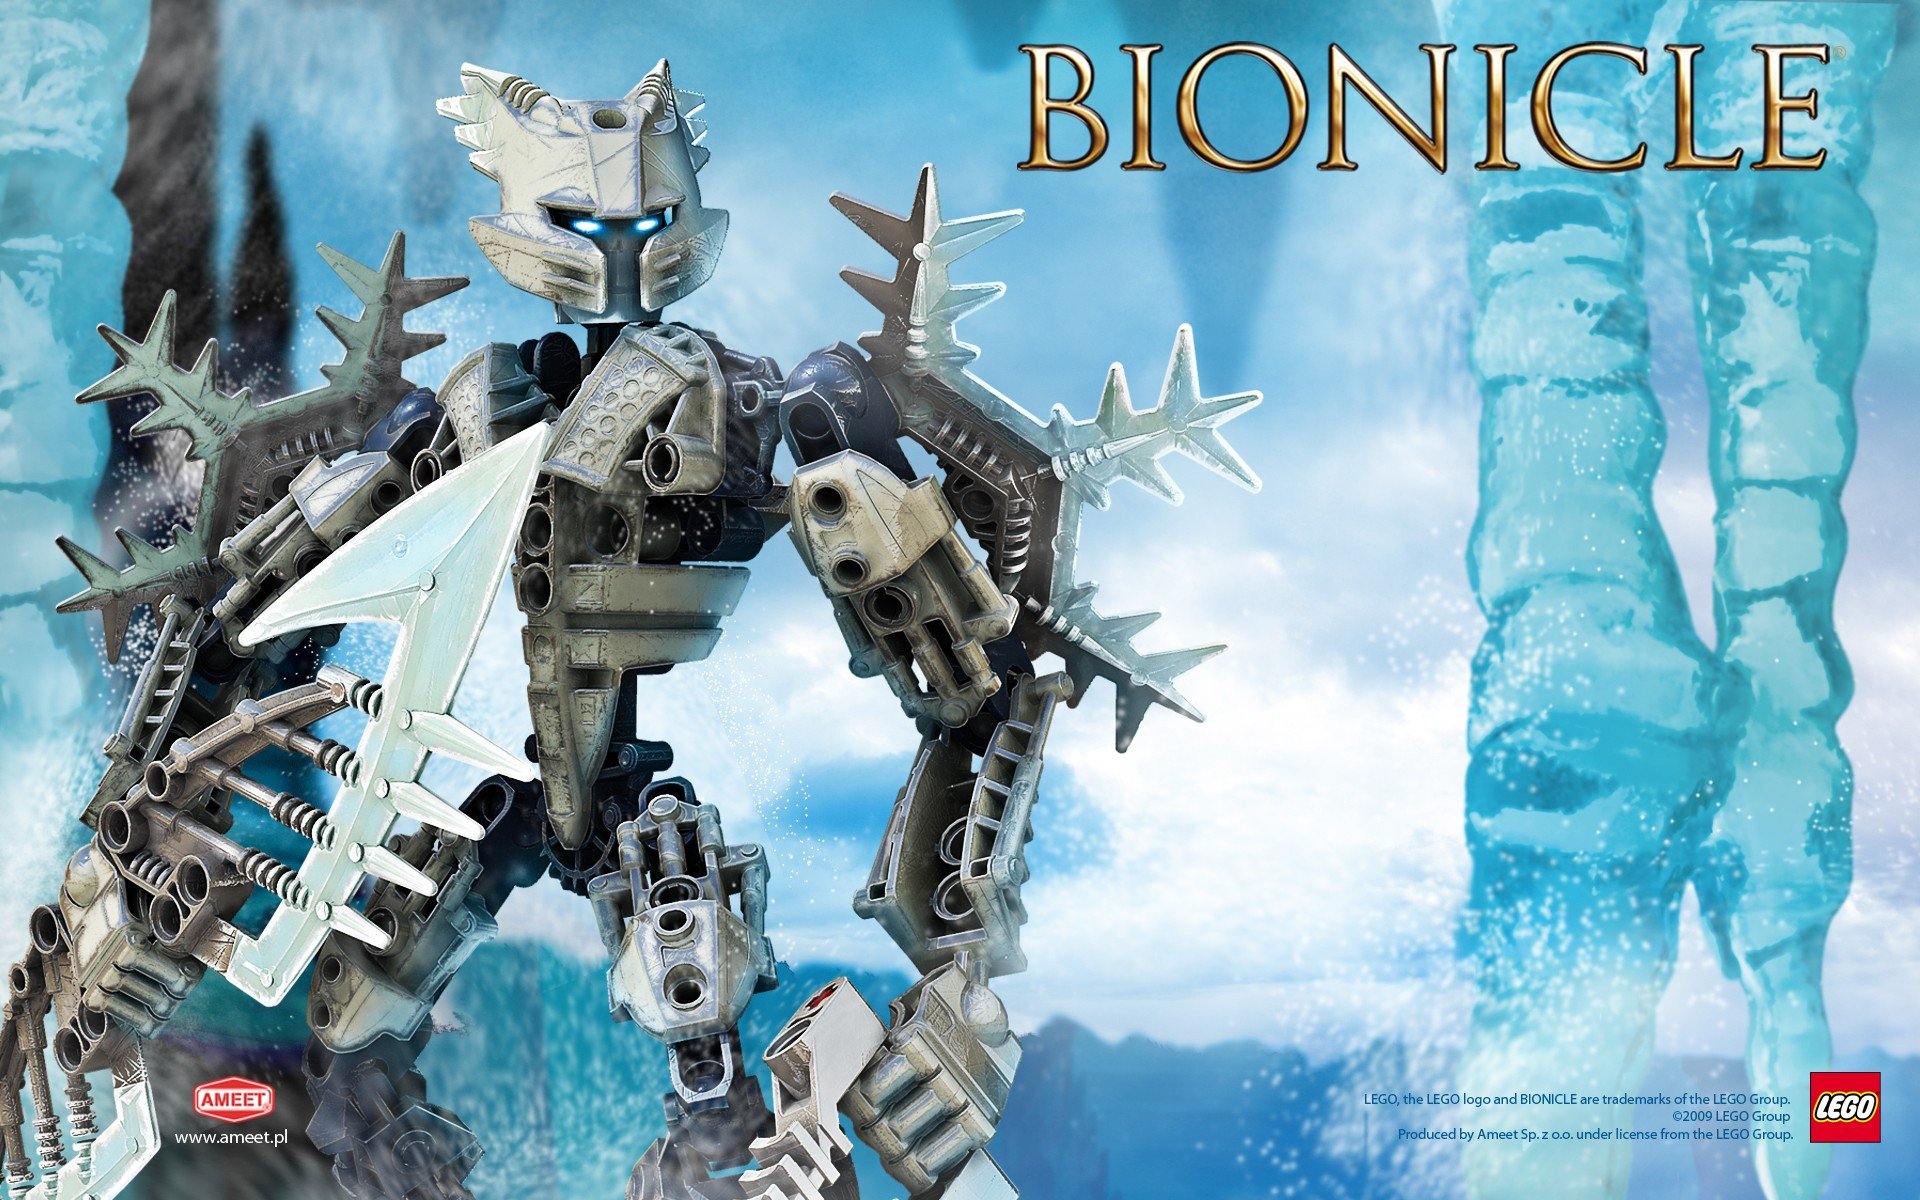 Bionicle, Ice Wallpaper